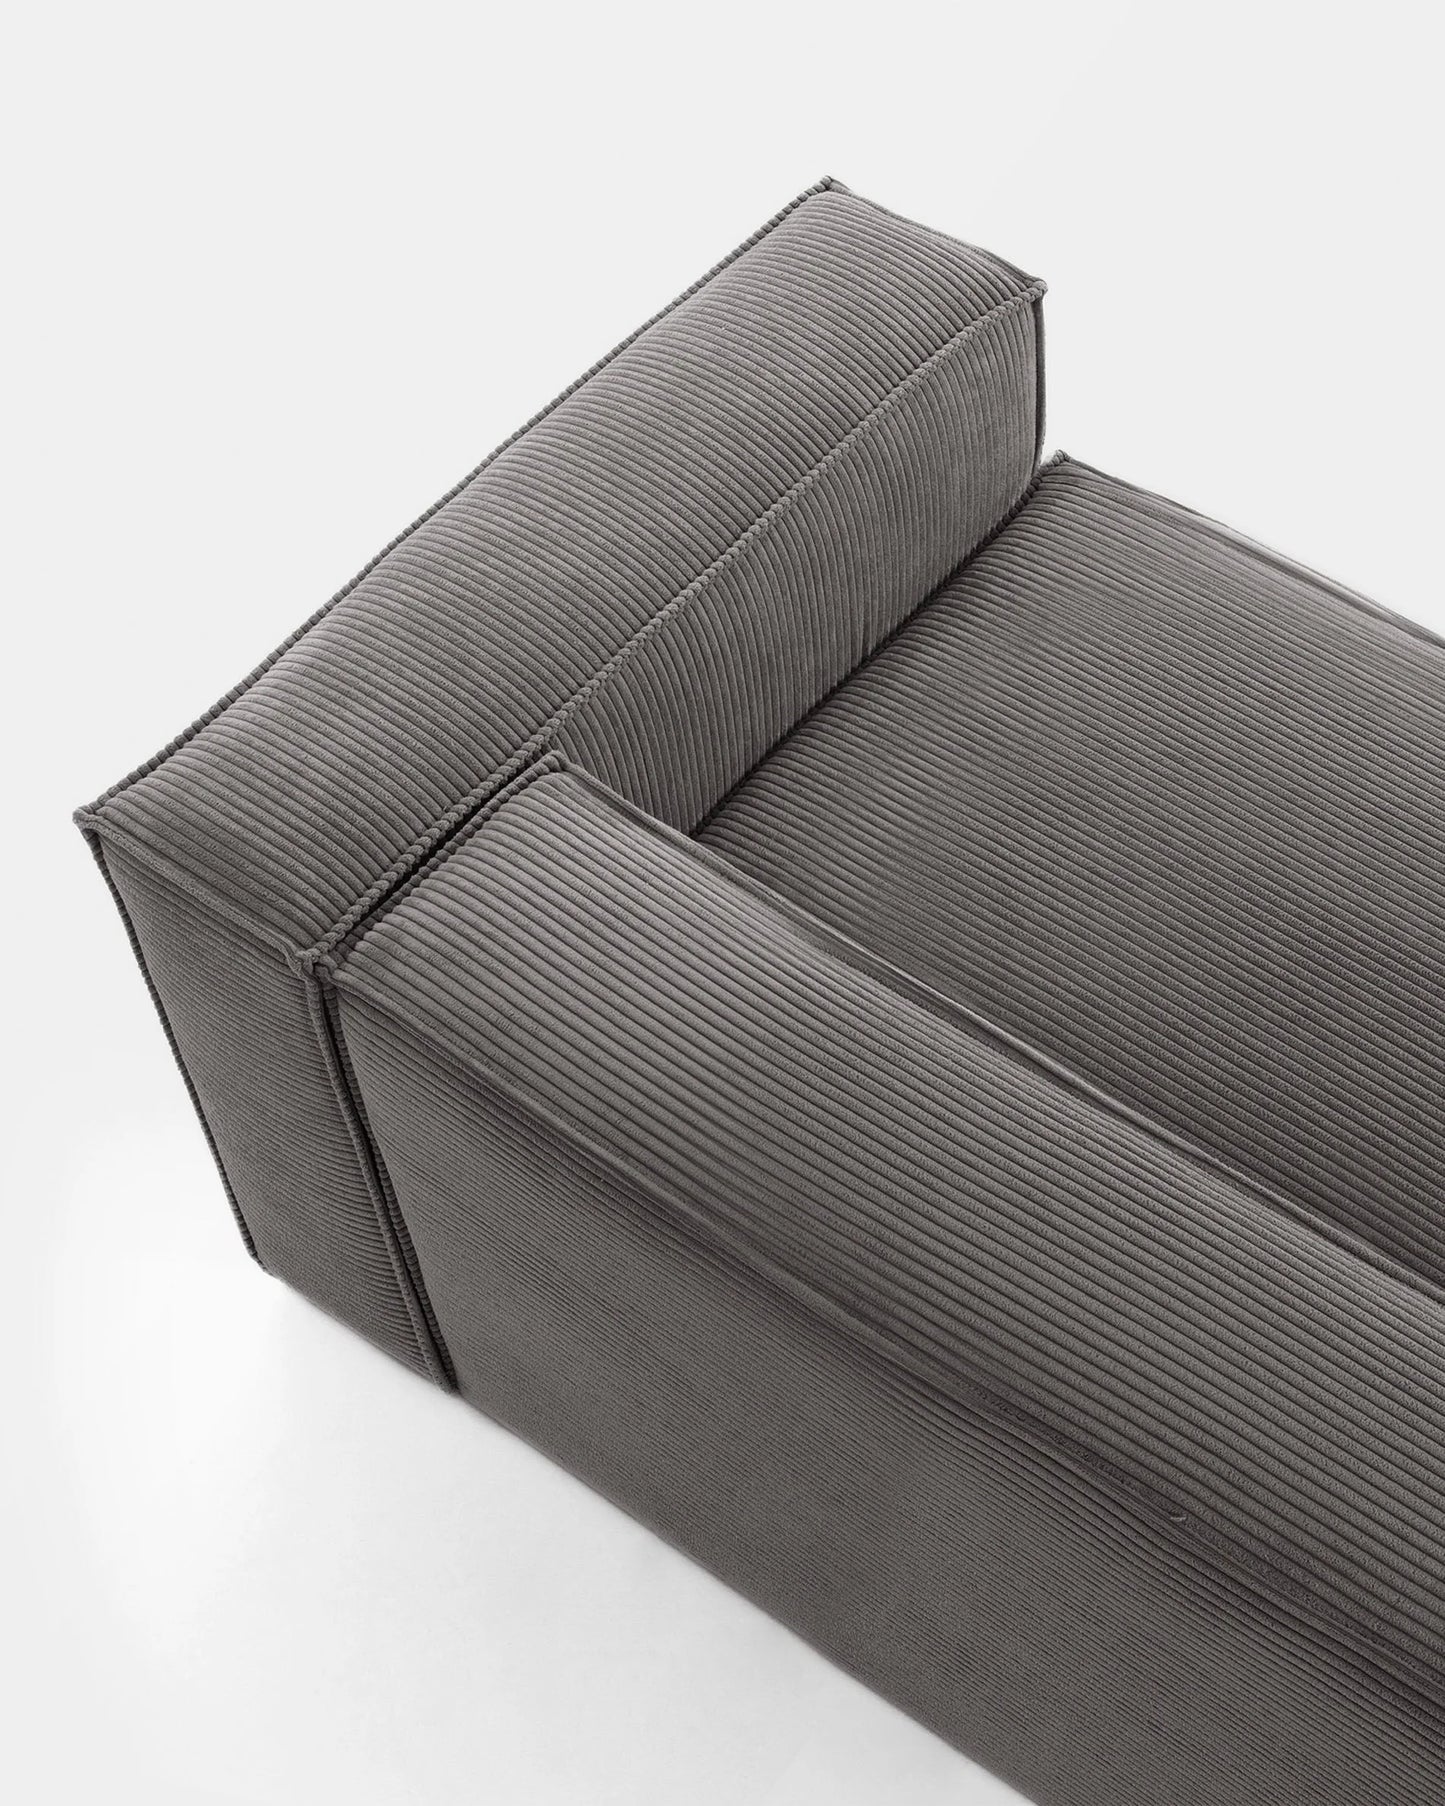 
                  
                    KORDSCHI - 3-Sitzer Sofa mit grauem Kord
                  
                